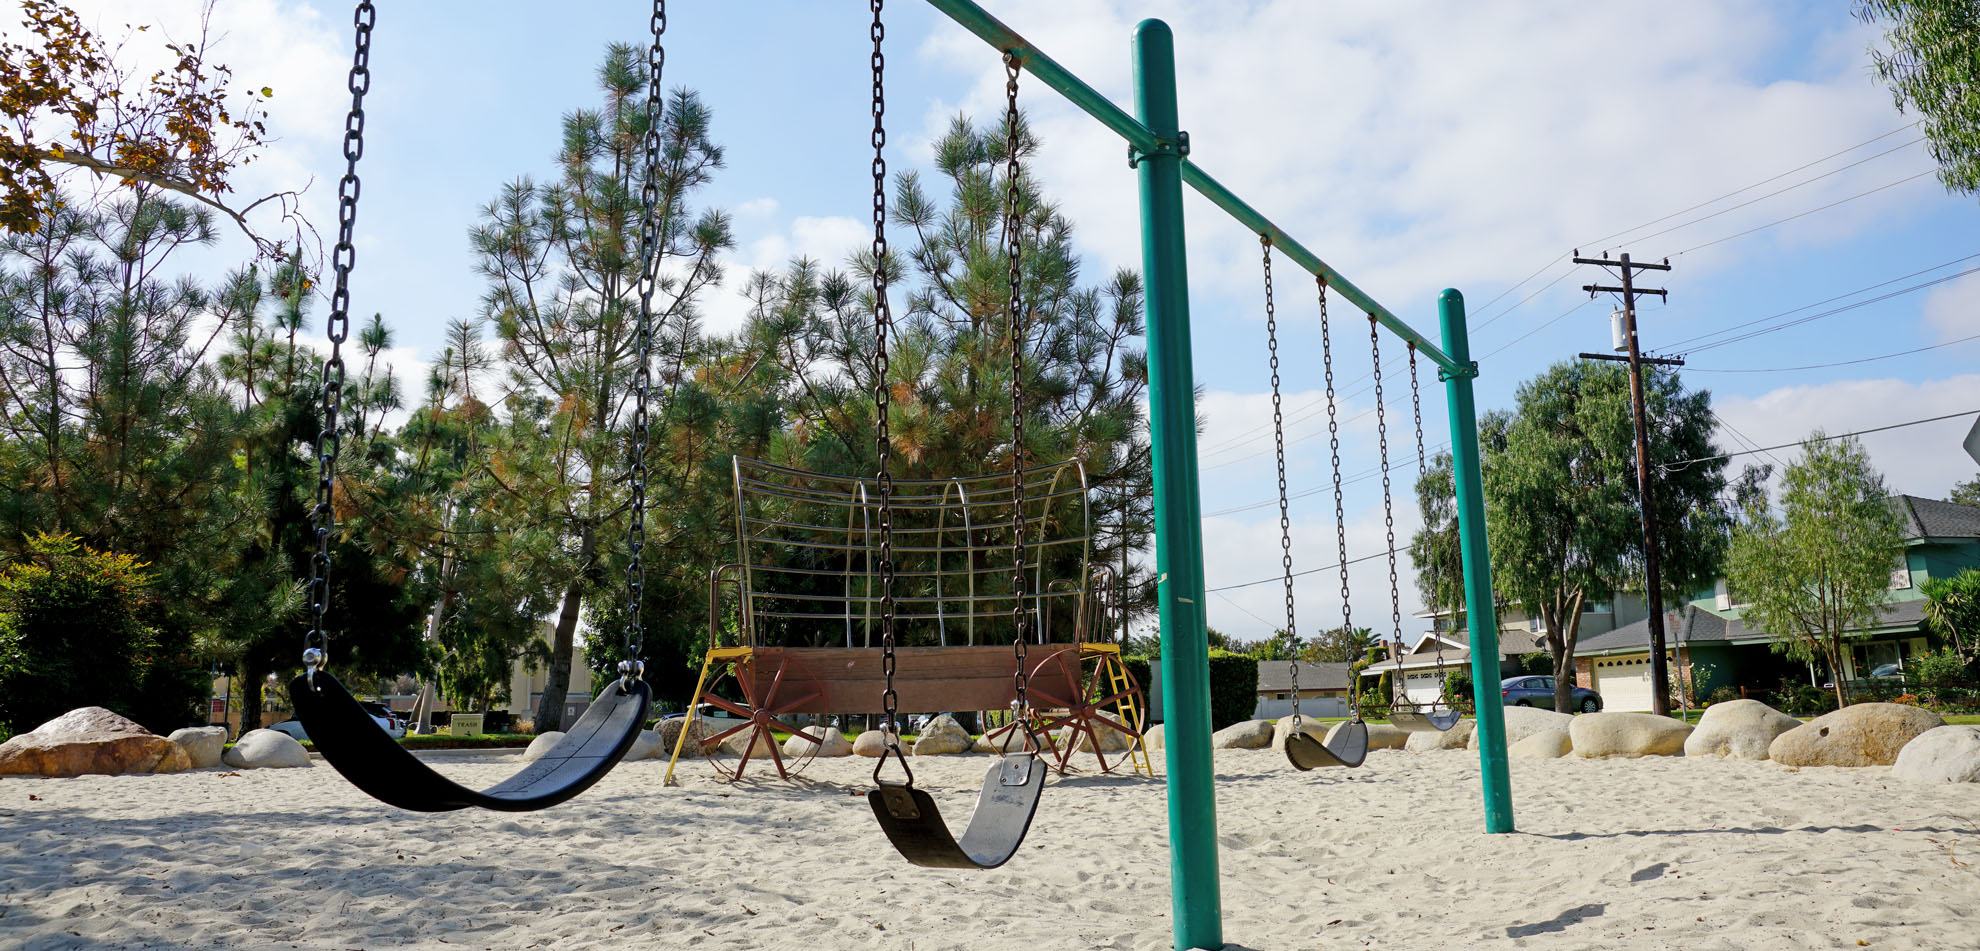 swings at Morrison Park